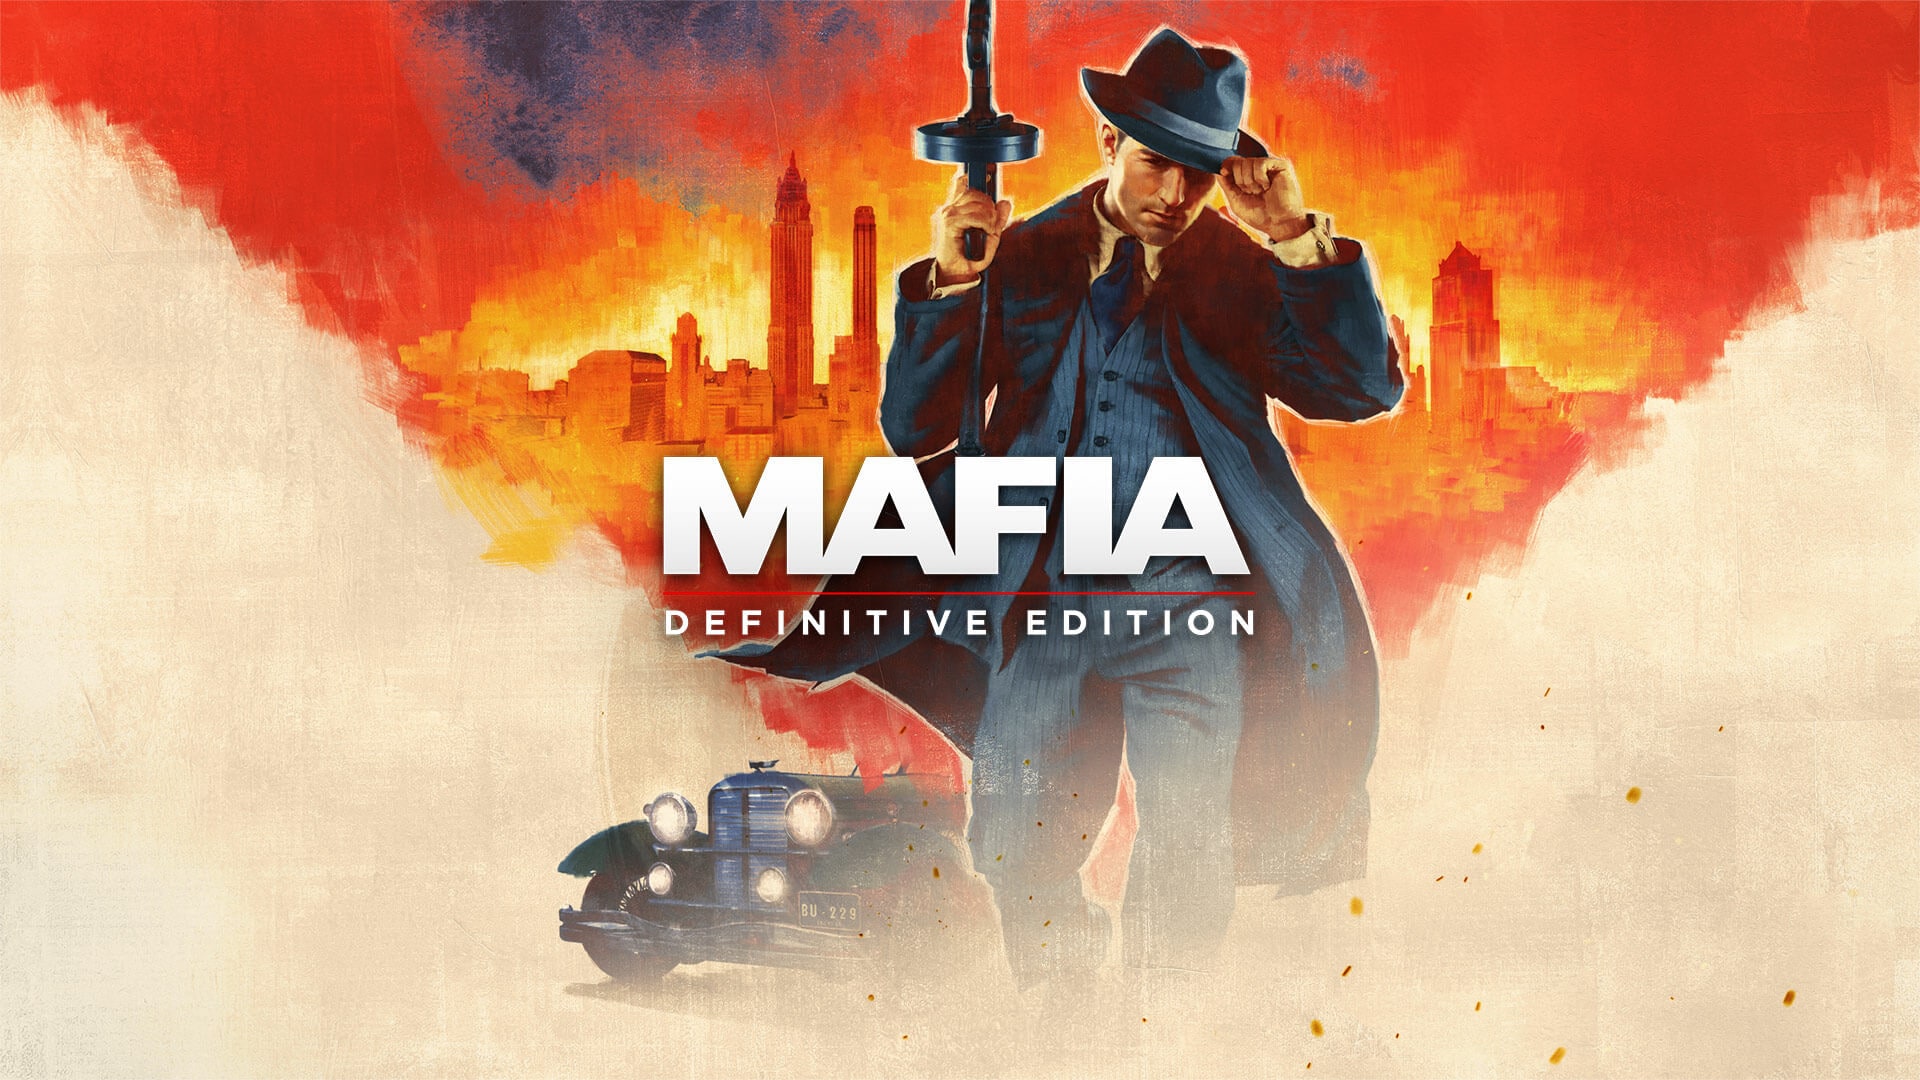 Mafia: Definitive Edition เตรียมวางจำหน่าย 28 ส.ค. นี้